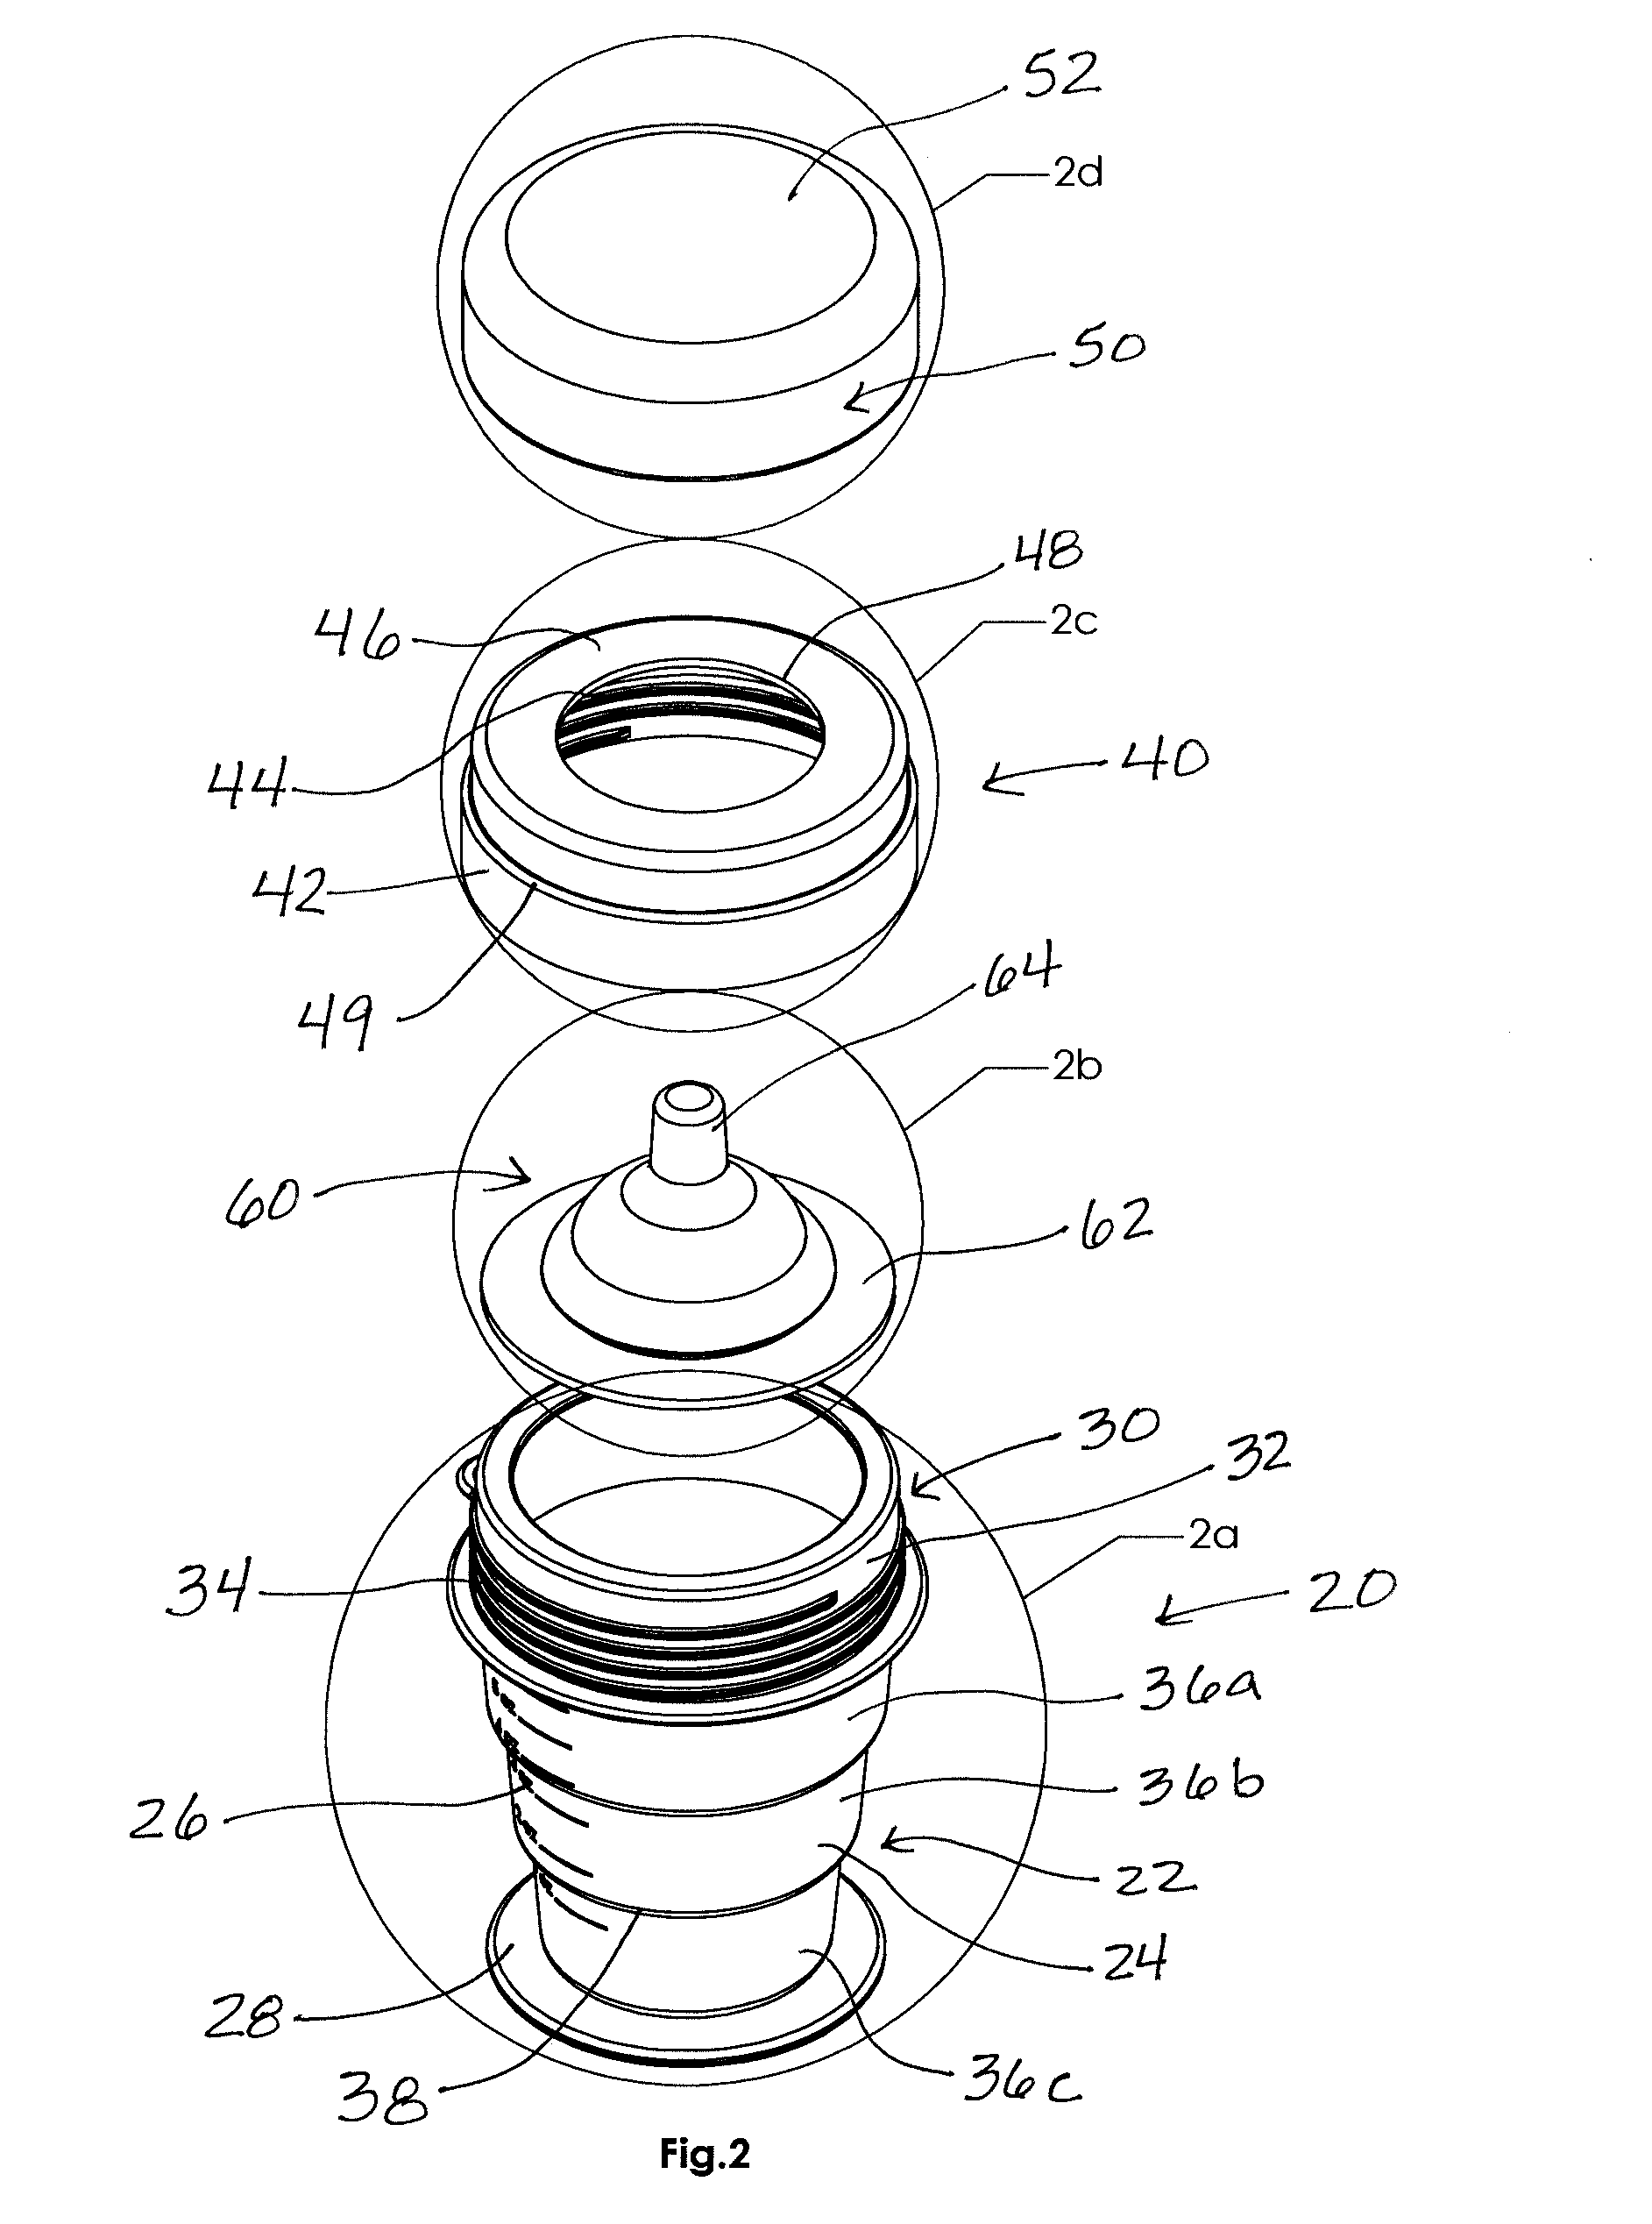 Collapsible Bottle Apparatus